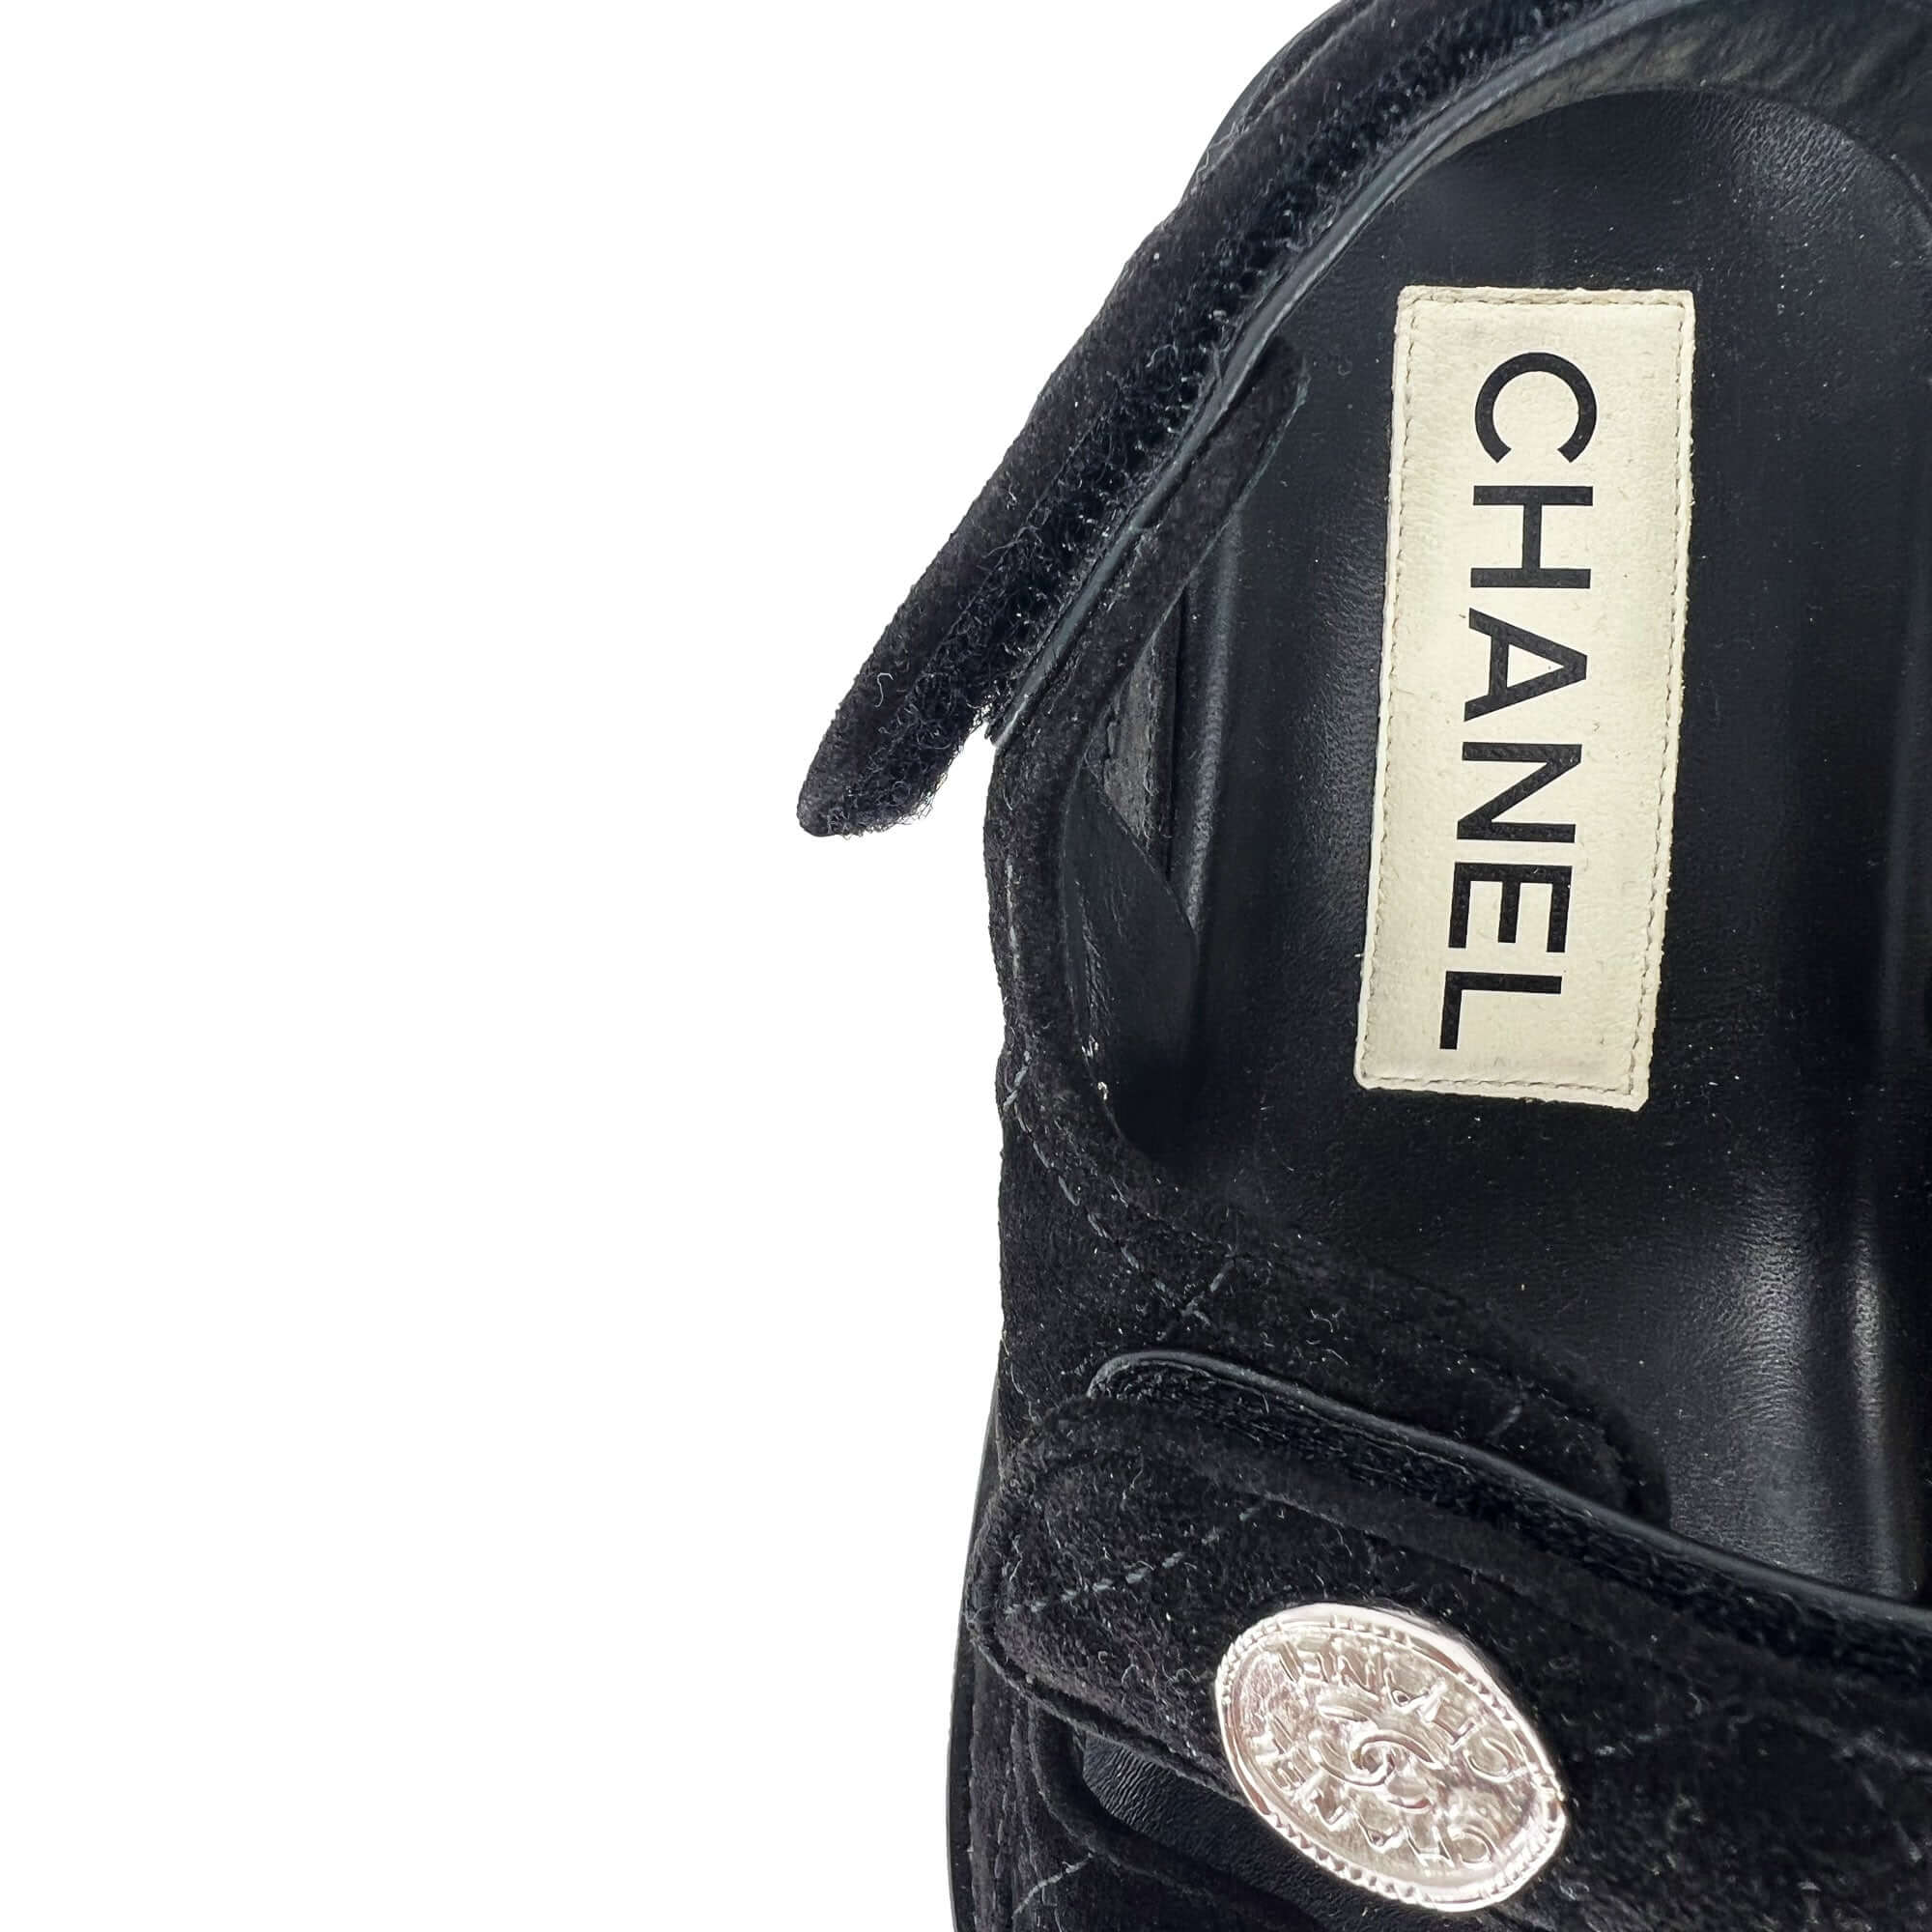 Chanel dad suede sandals